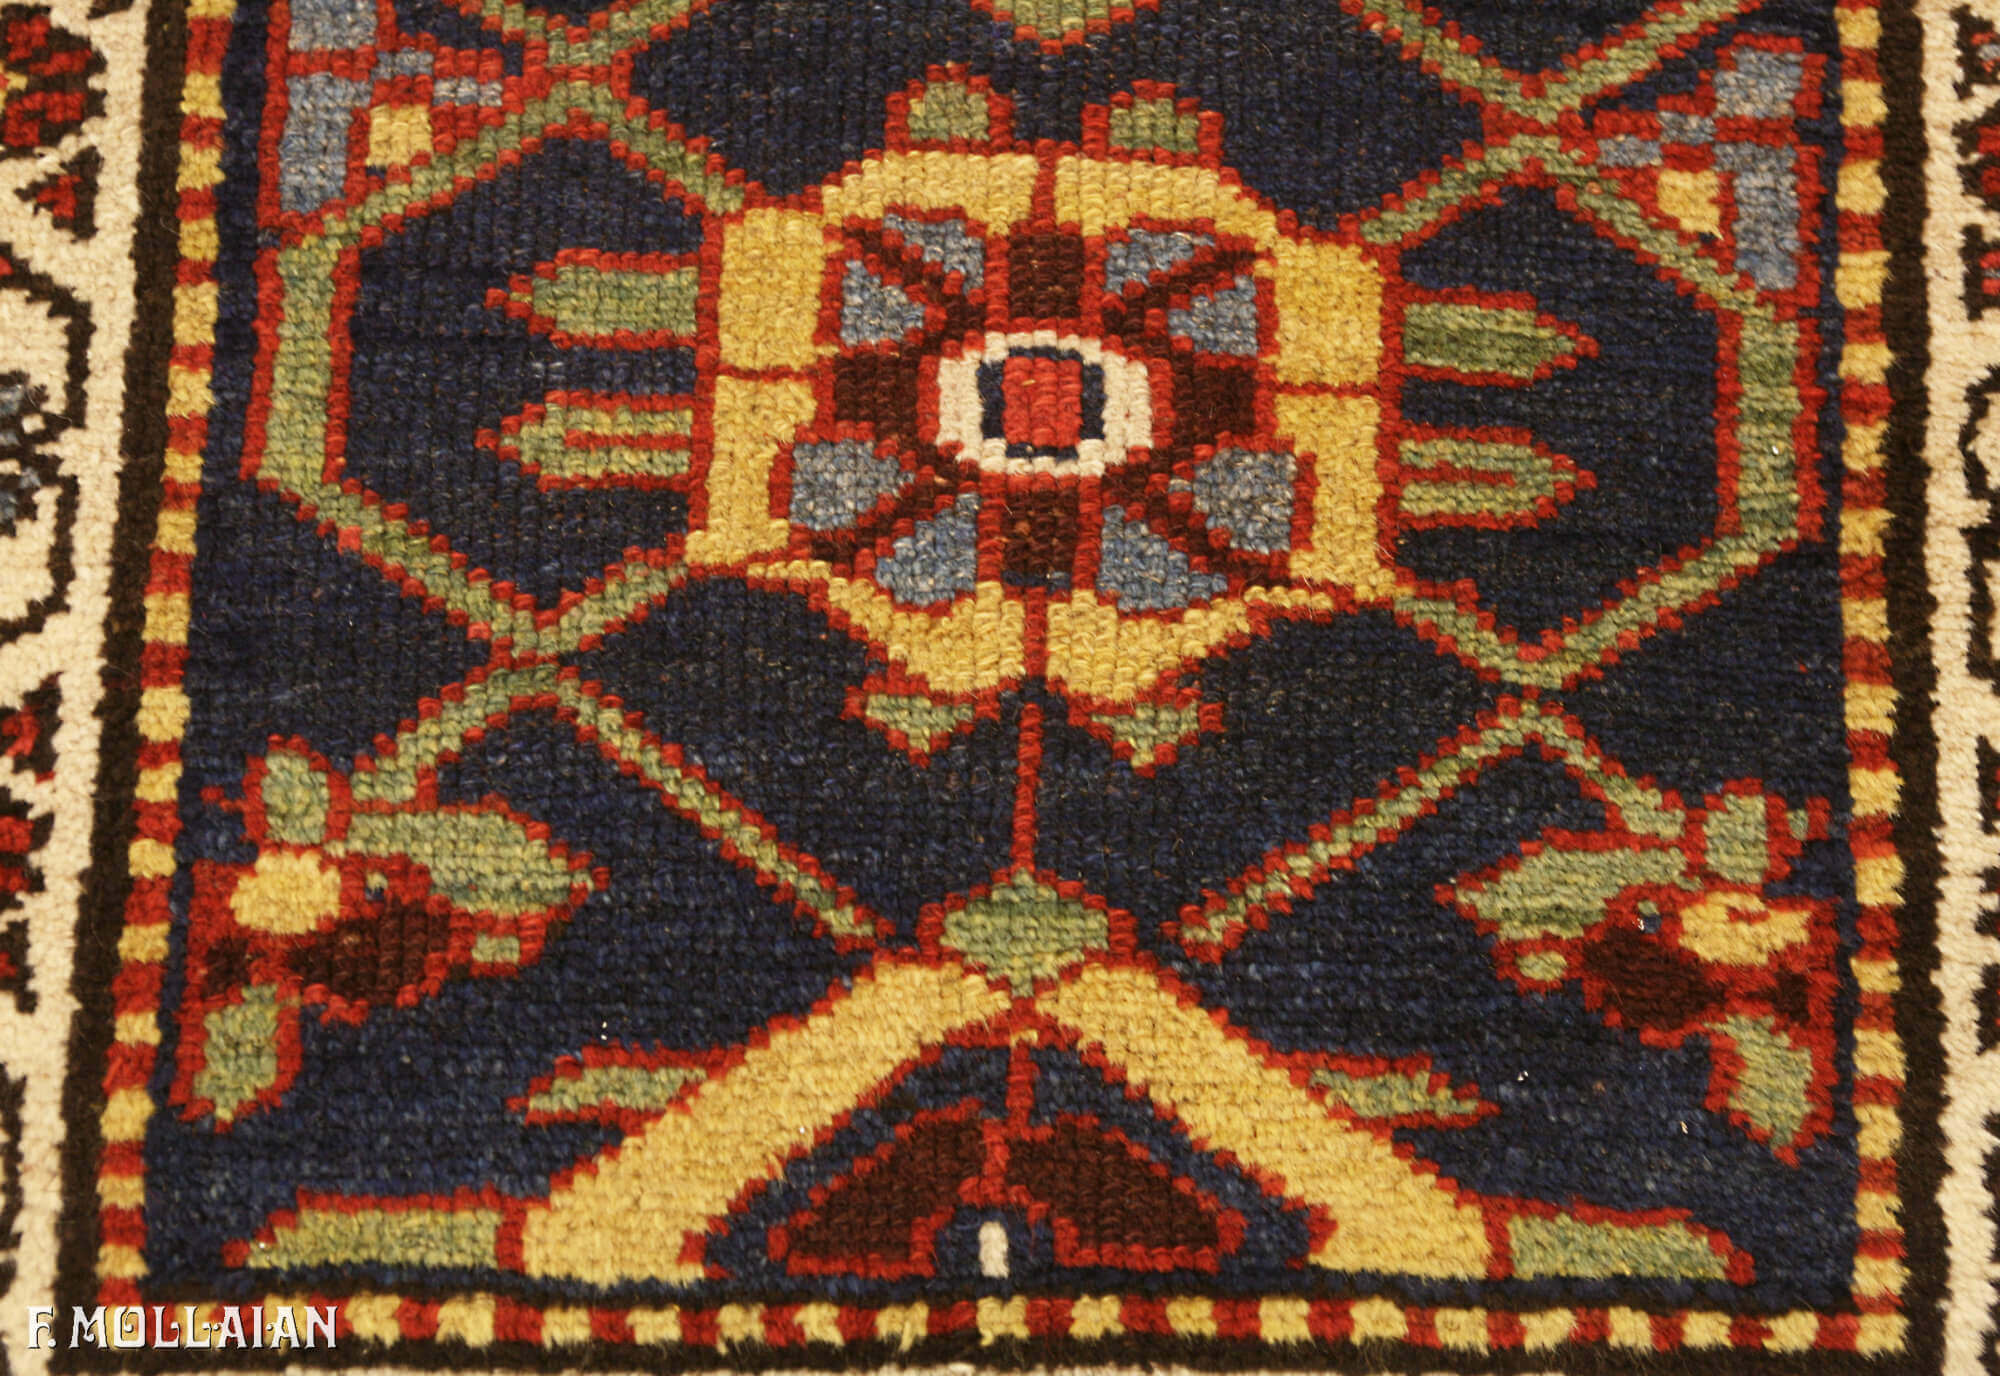 Teppich Spur Persischer Antiker Varamin n°:41473658